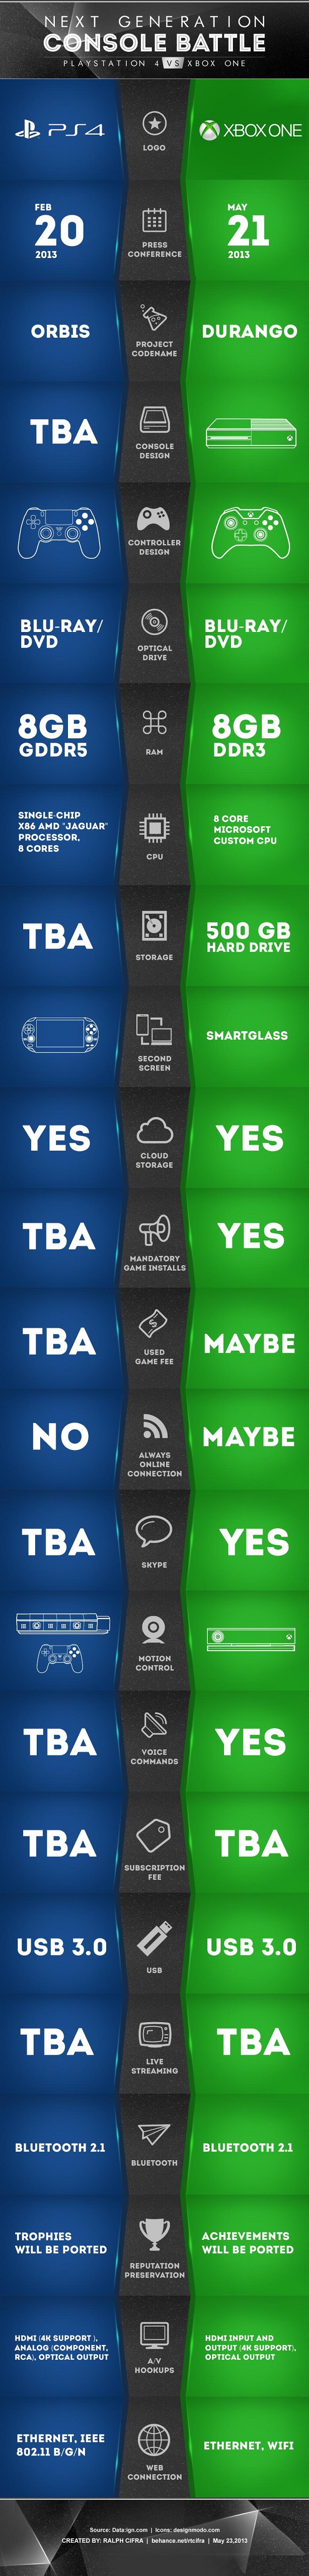 xbox One vs PS4-Infographic